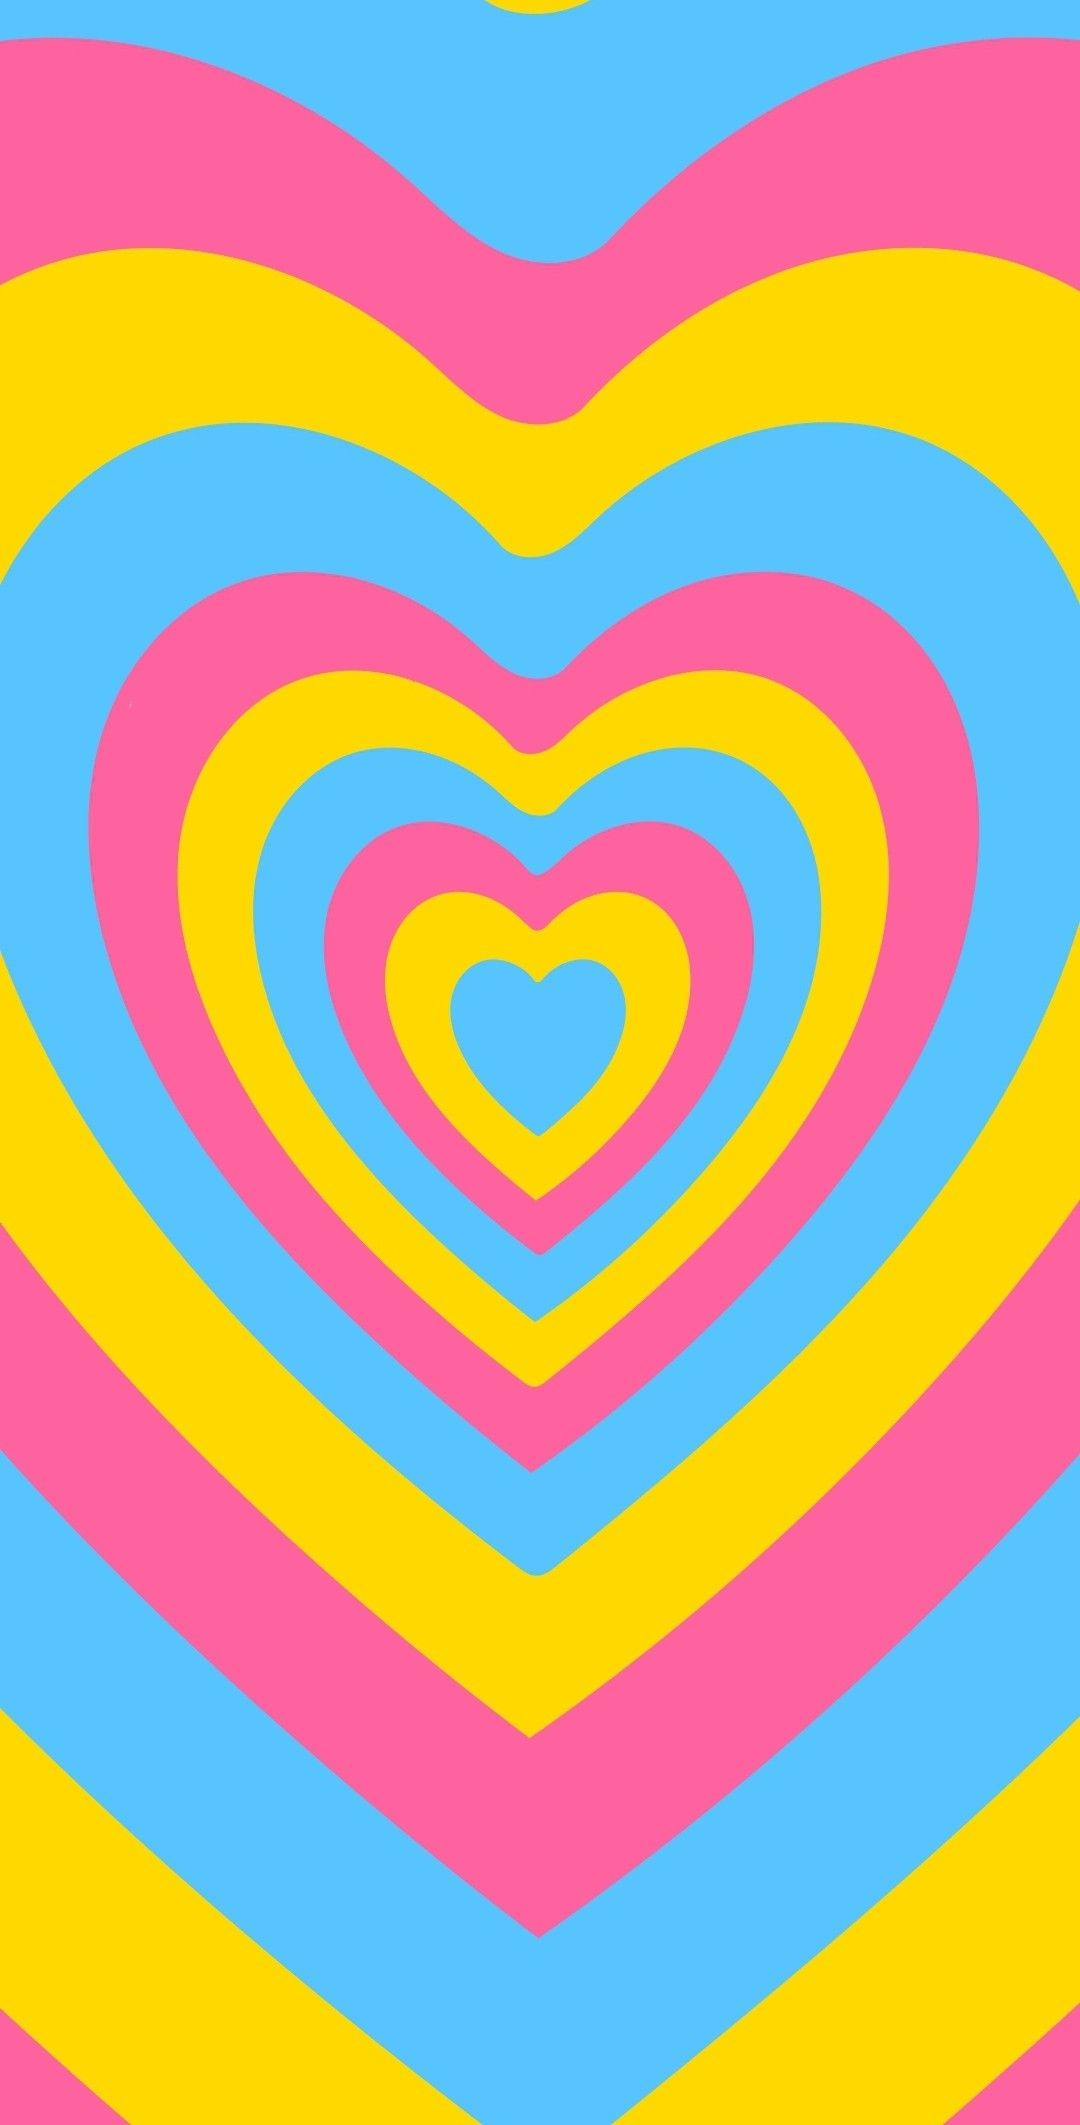 1080x2125 54 Powrpuff girls hearts wallpapers ideas | heart wallpaper, wallpaper, heart background